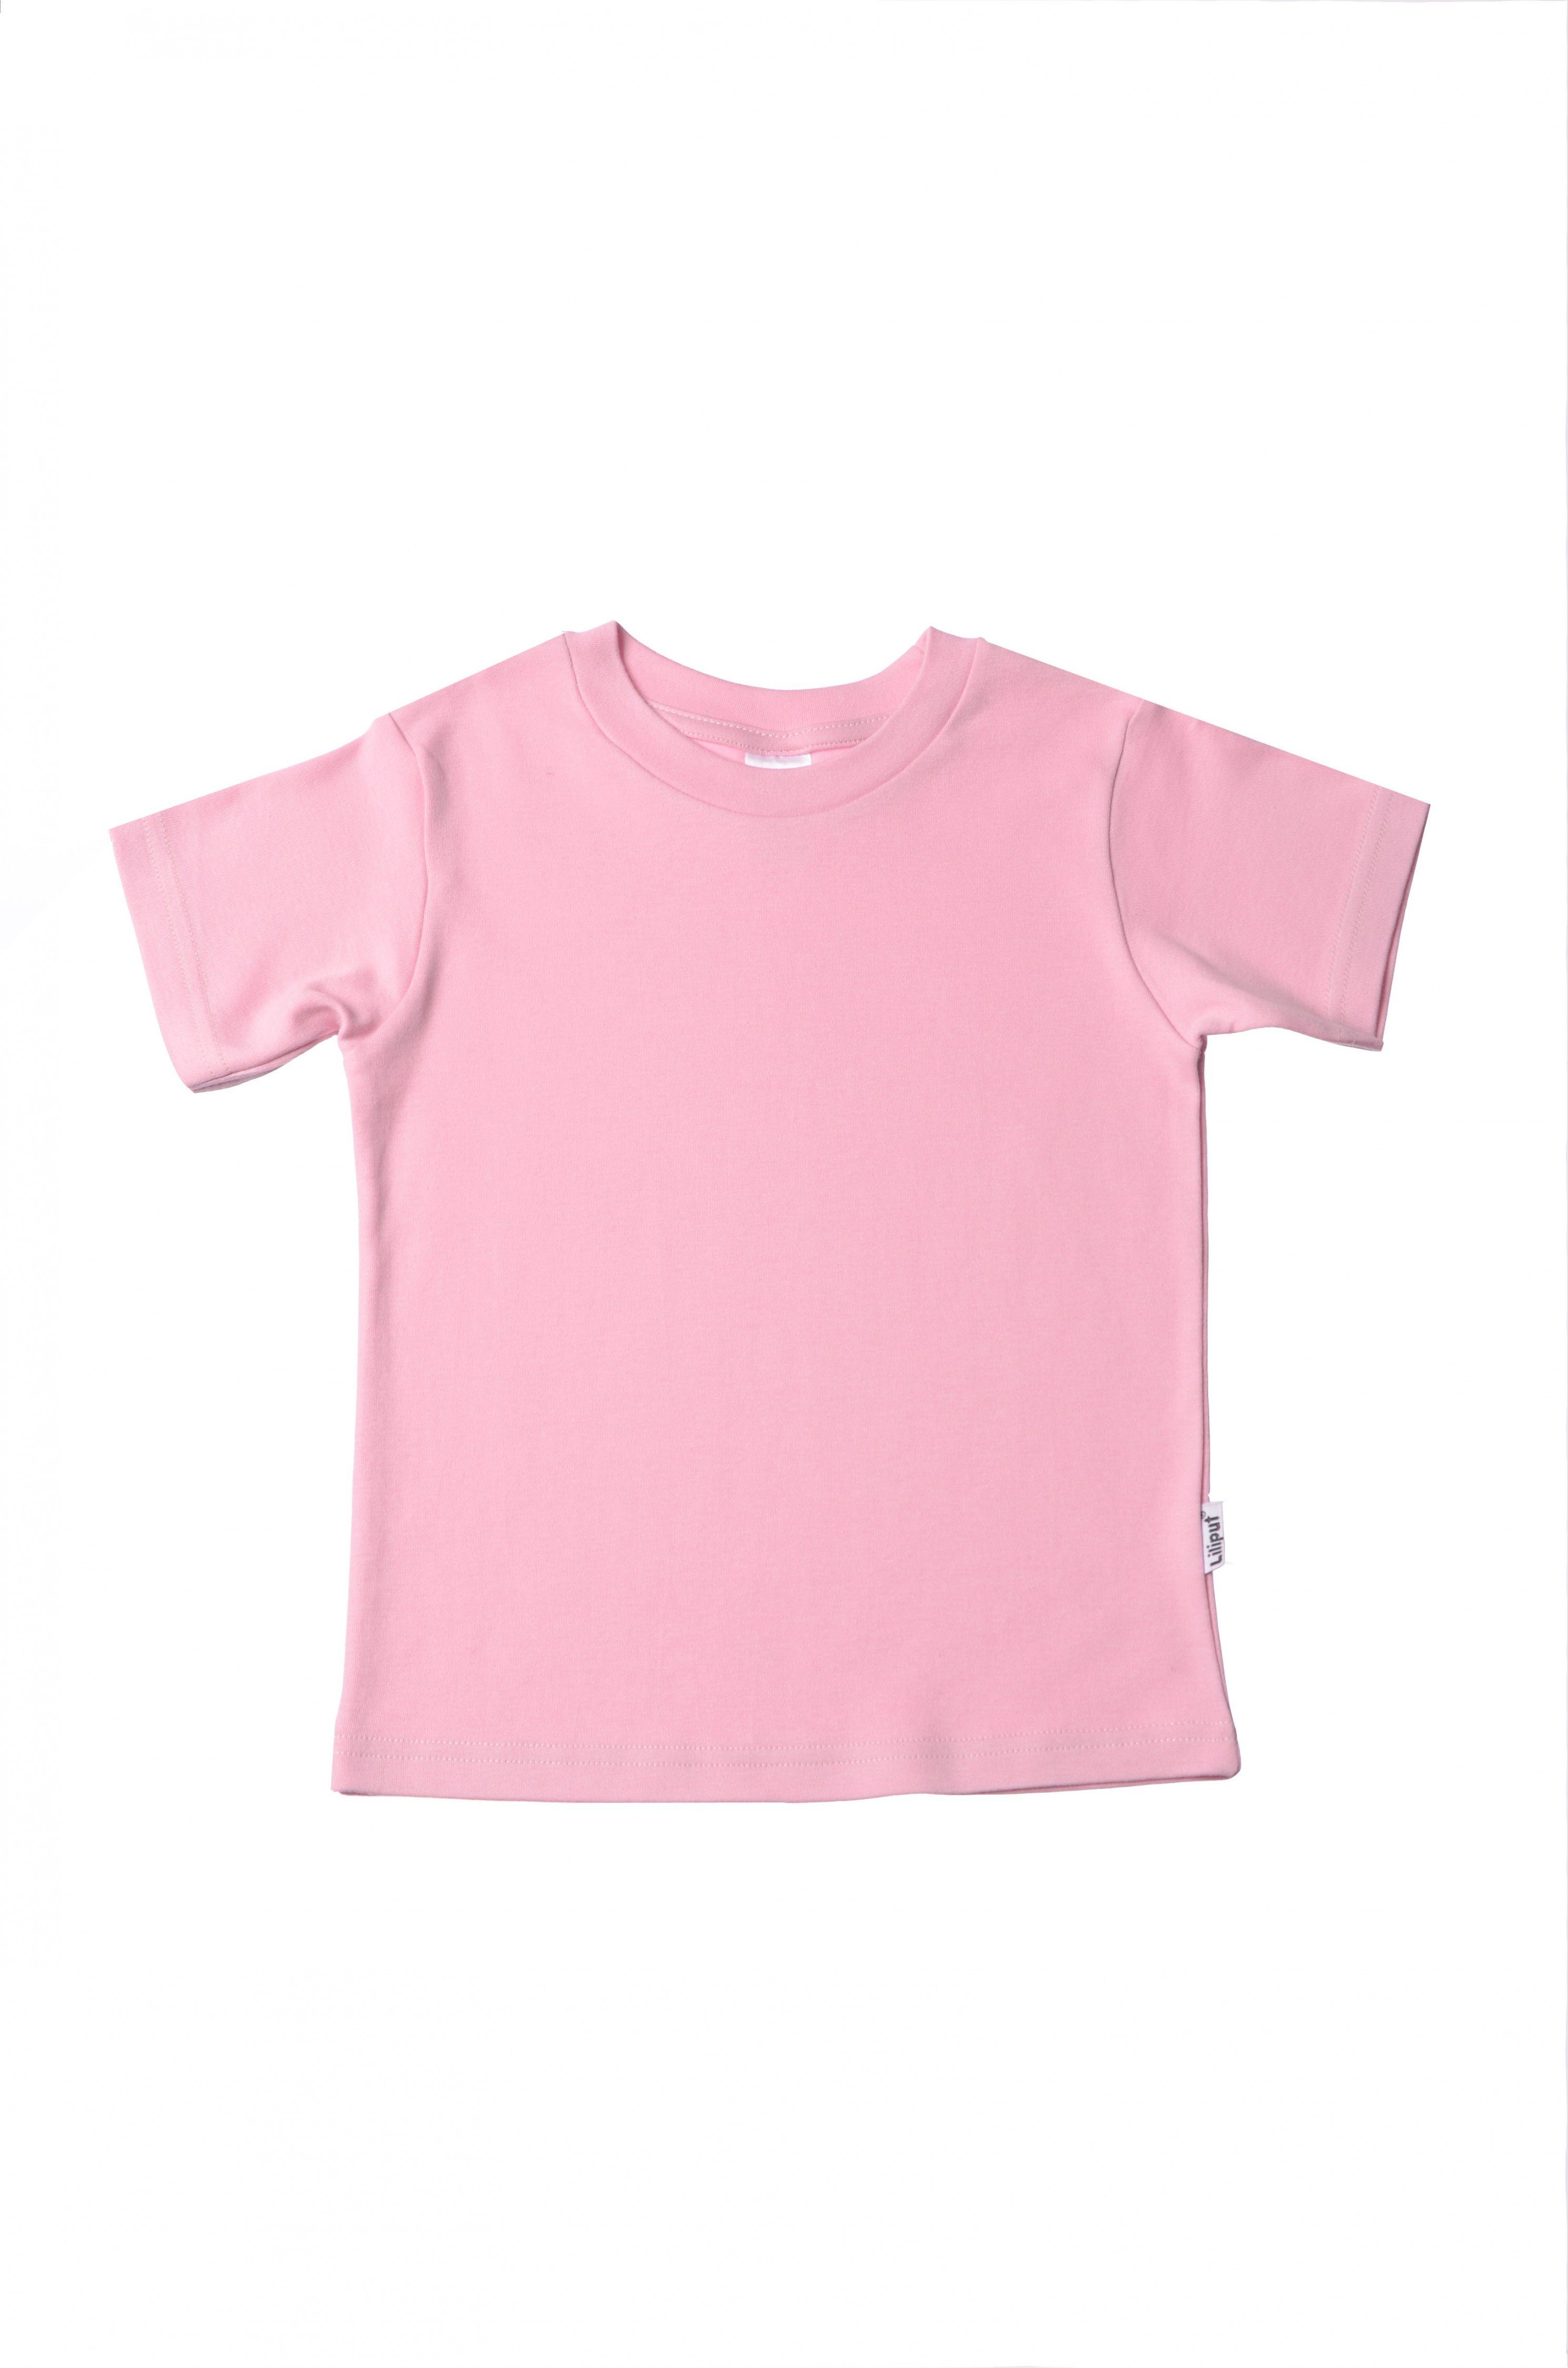 niedlichem Design in rosa Liliput T-Shirt